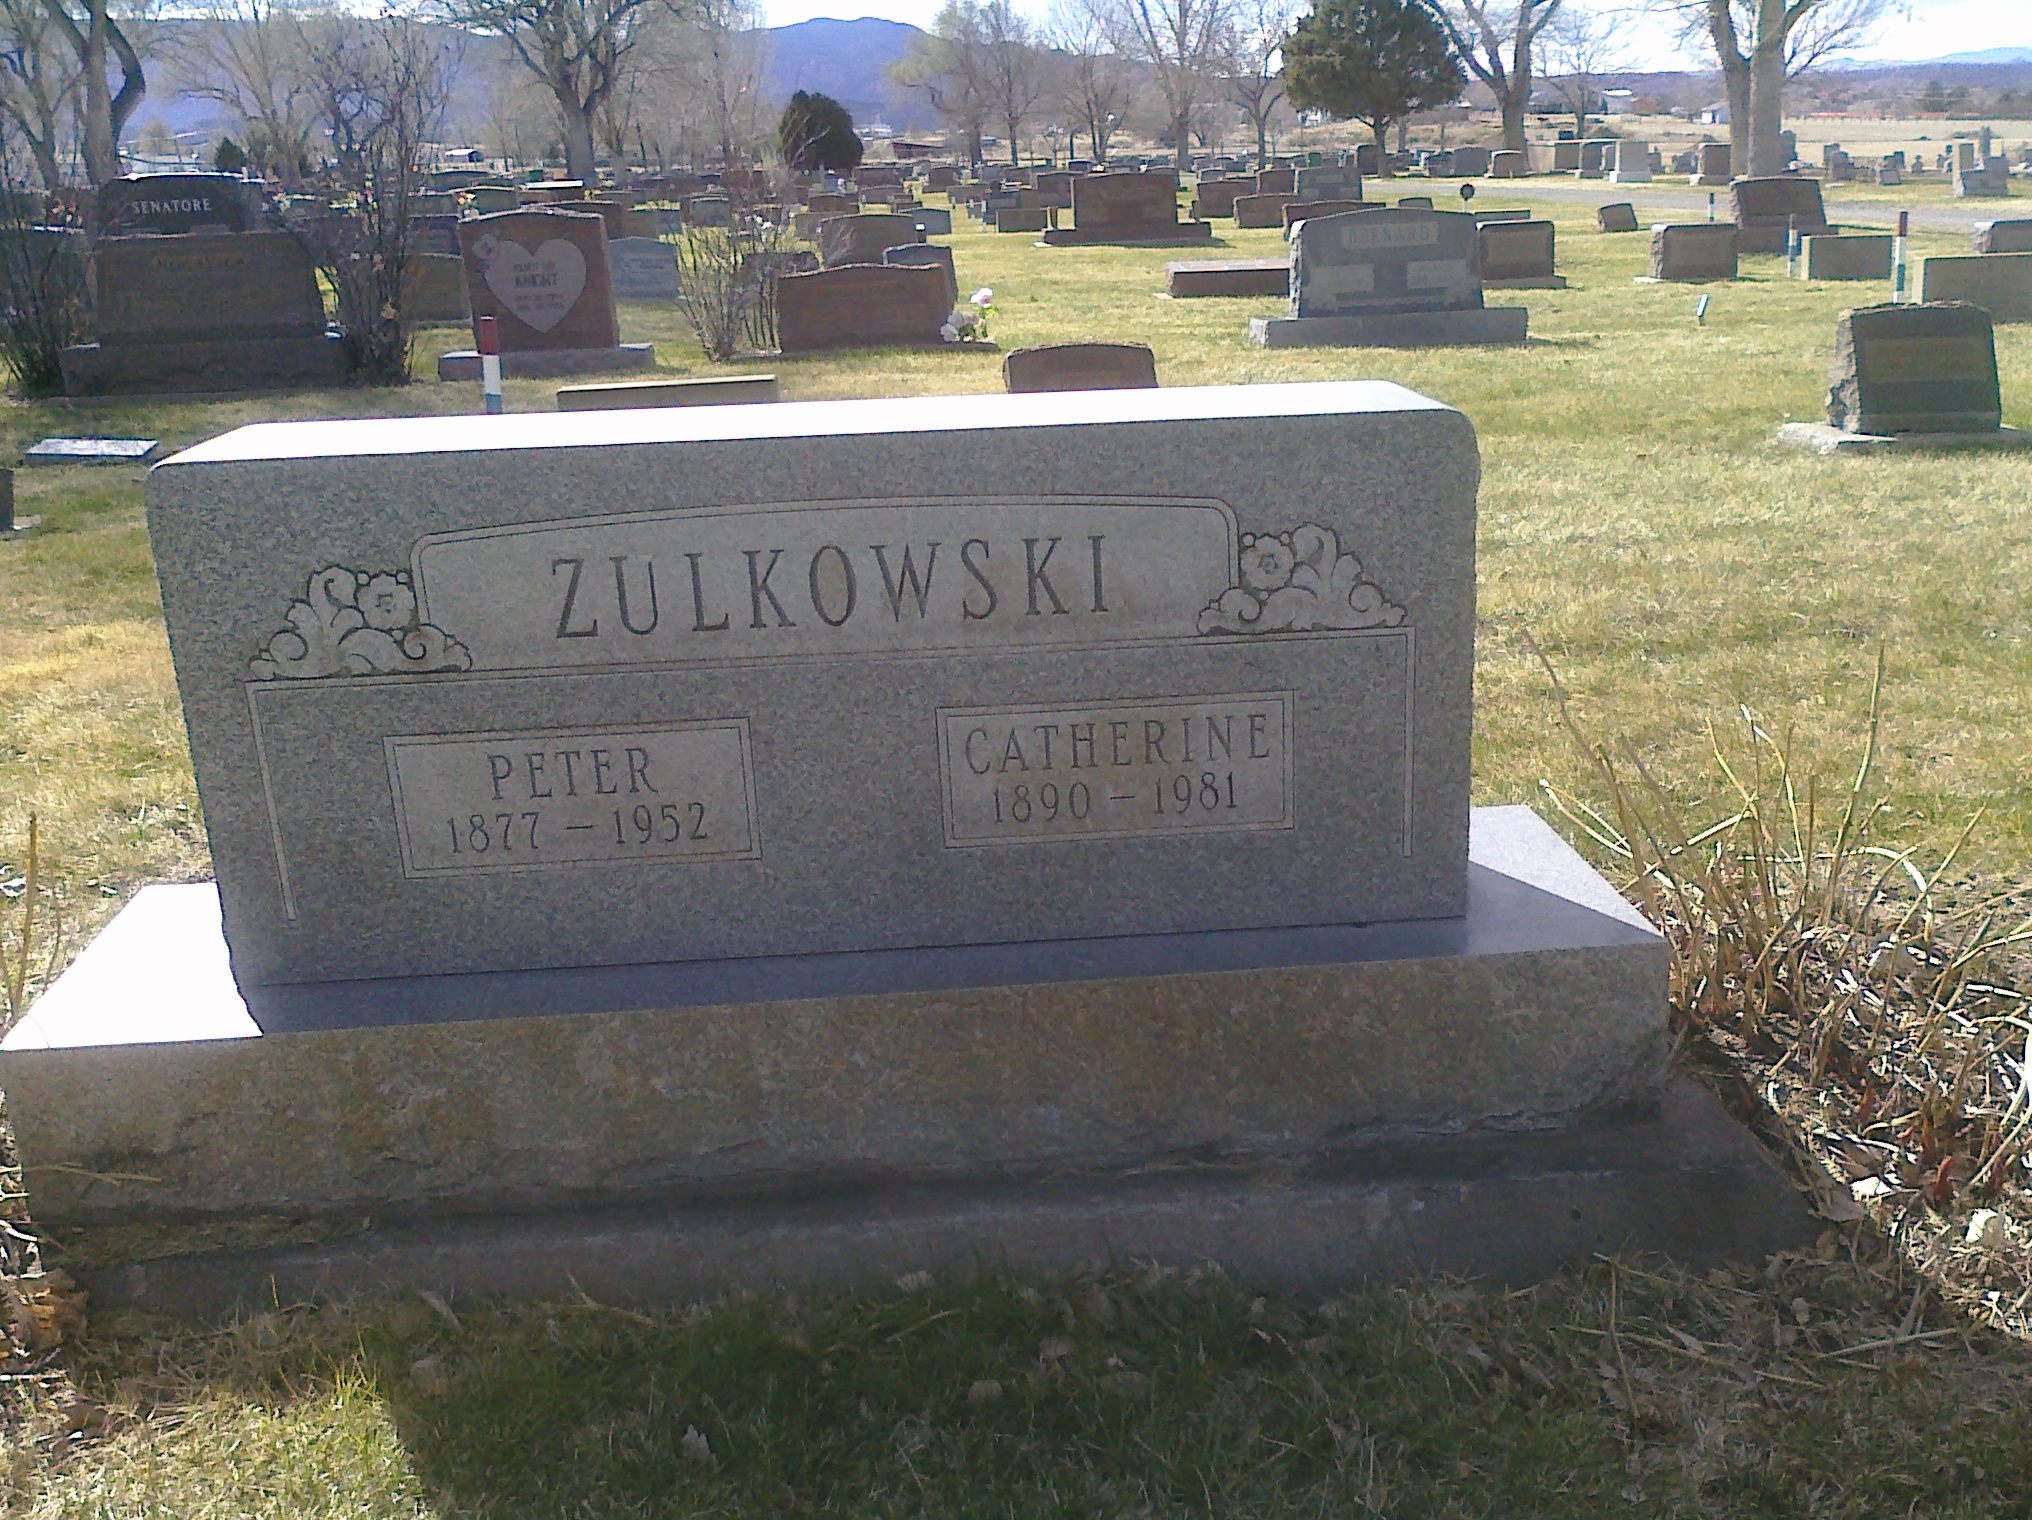 Peter and Catherine Zulkowski’s grave (30 MAR 2011)